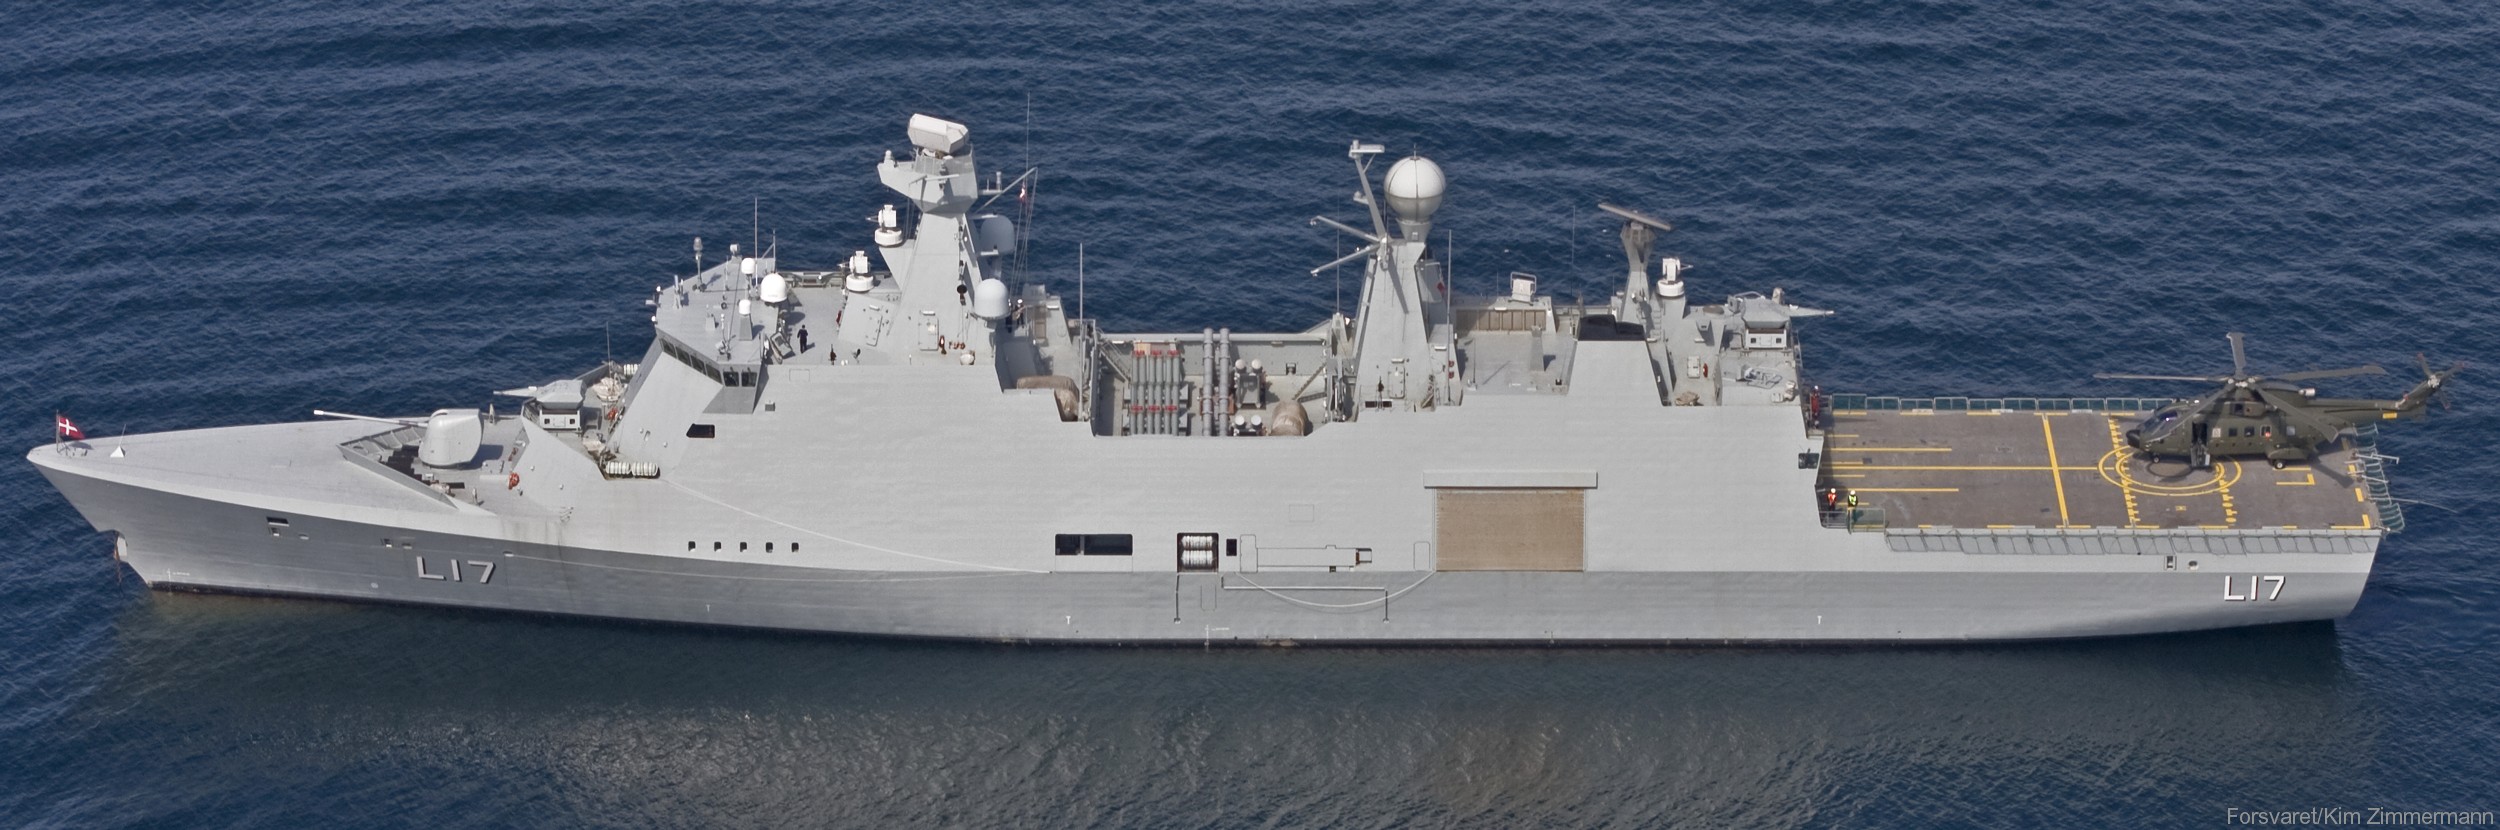 f-342 hdms esbern snare l-17 frigate command support ship royal danish navy 55